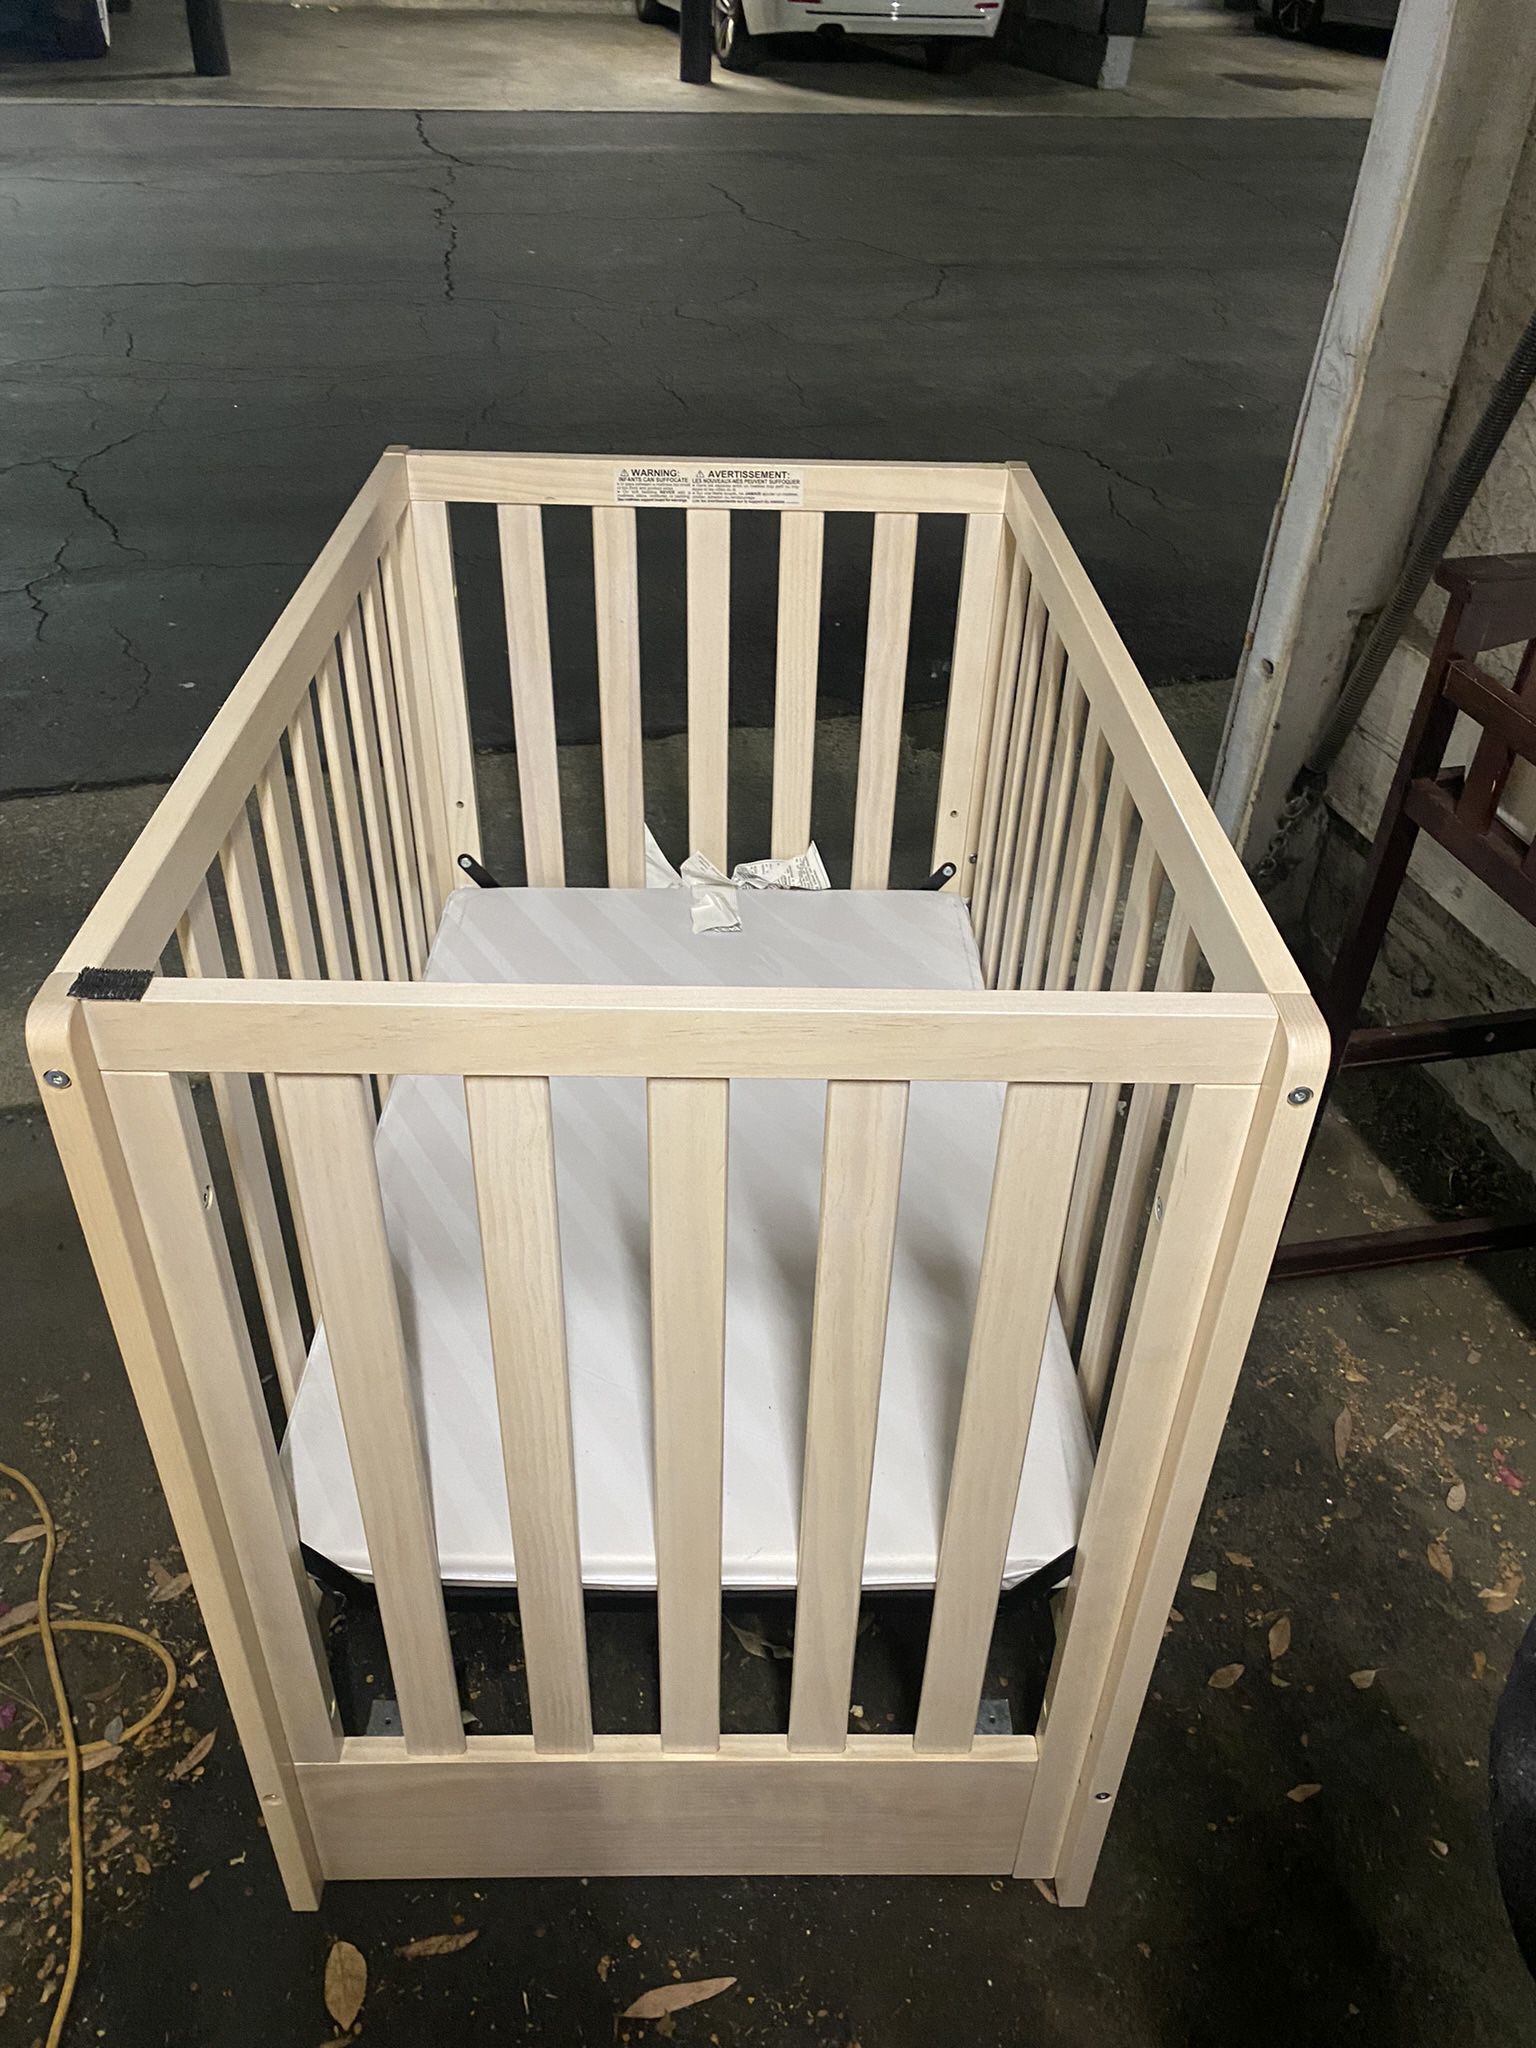 Strong Build Baby Crib